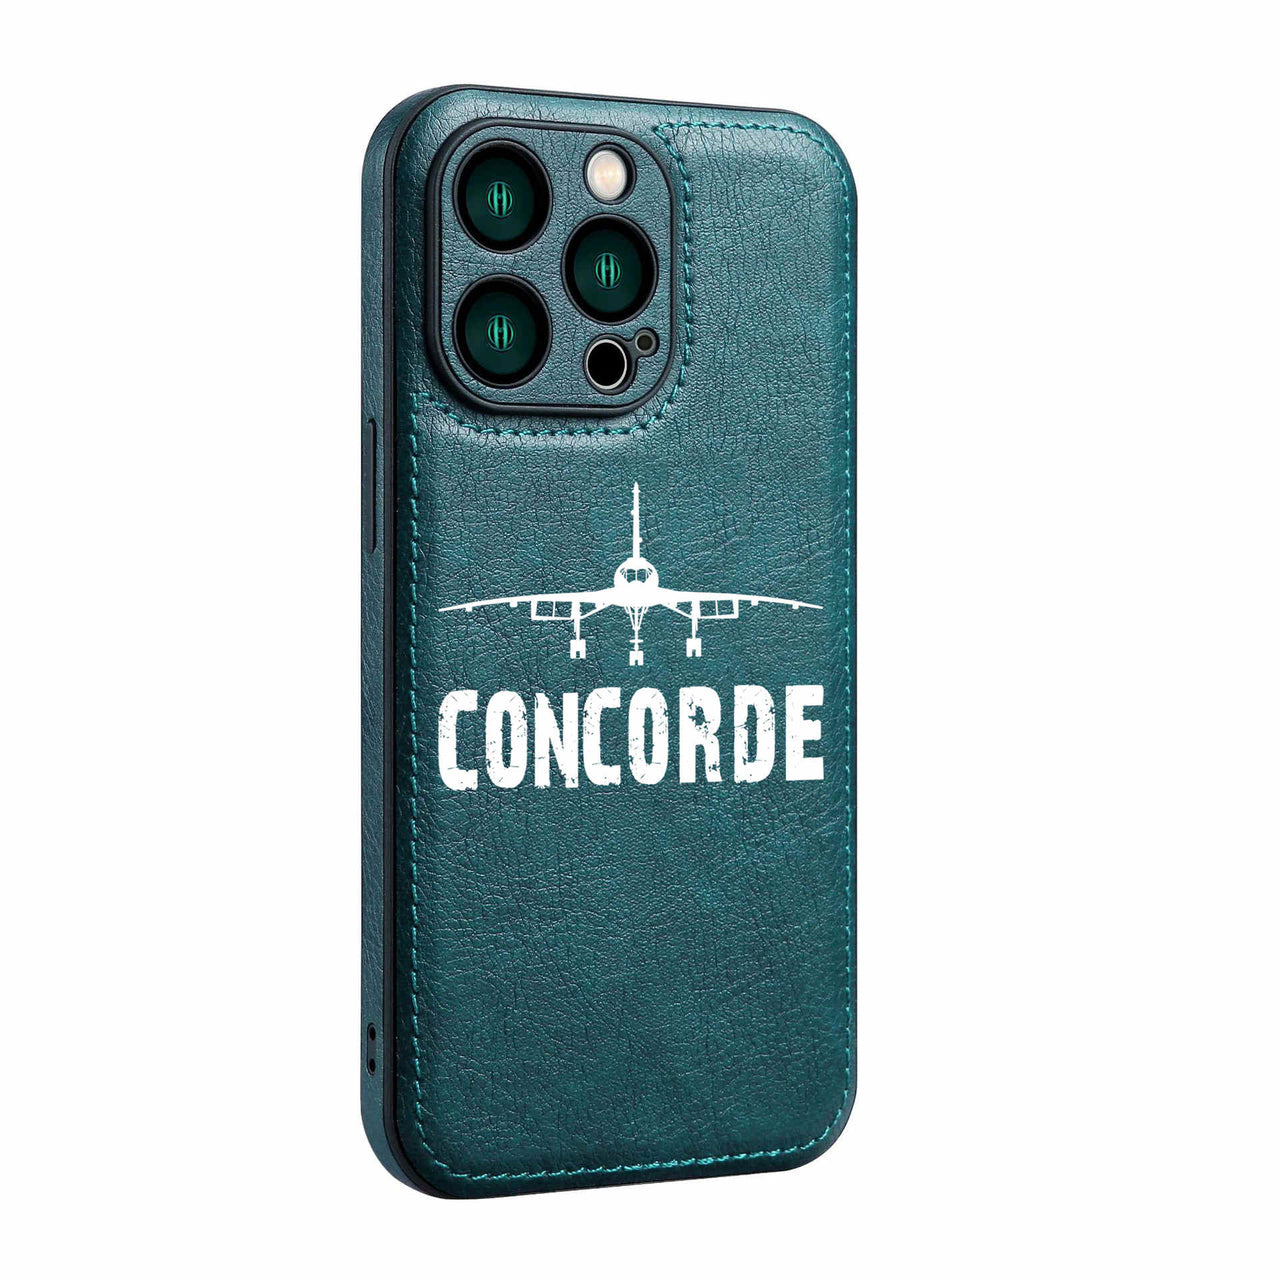 Concorde & Plane Designed Leather iPhone Cases